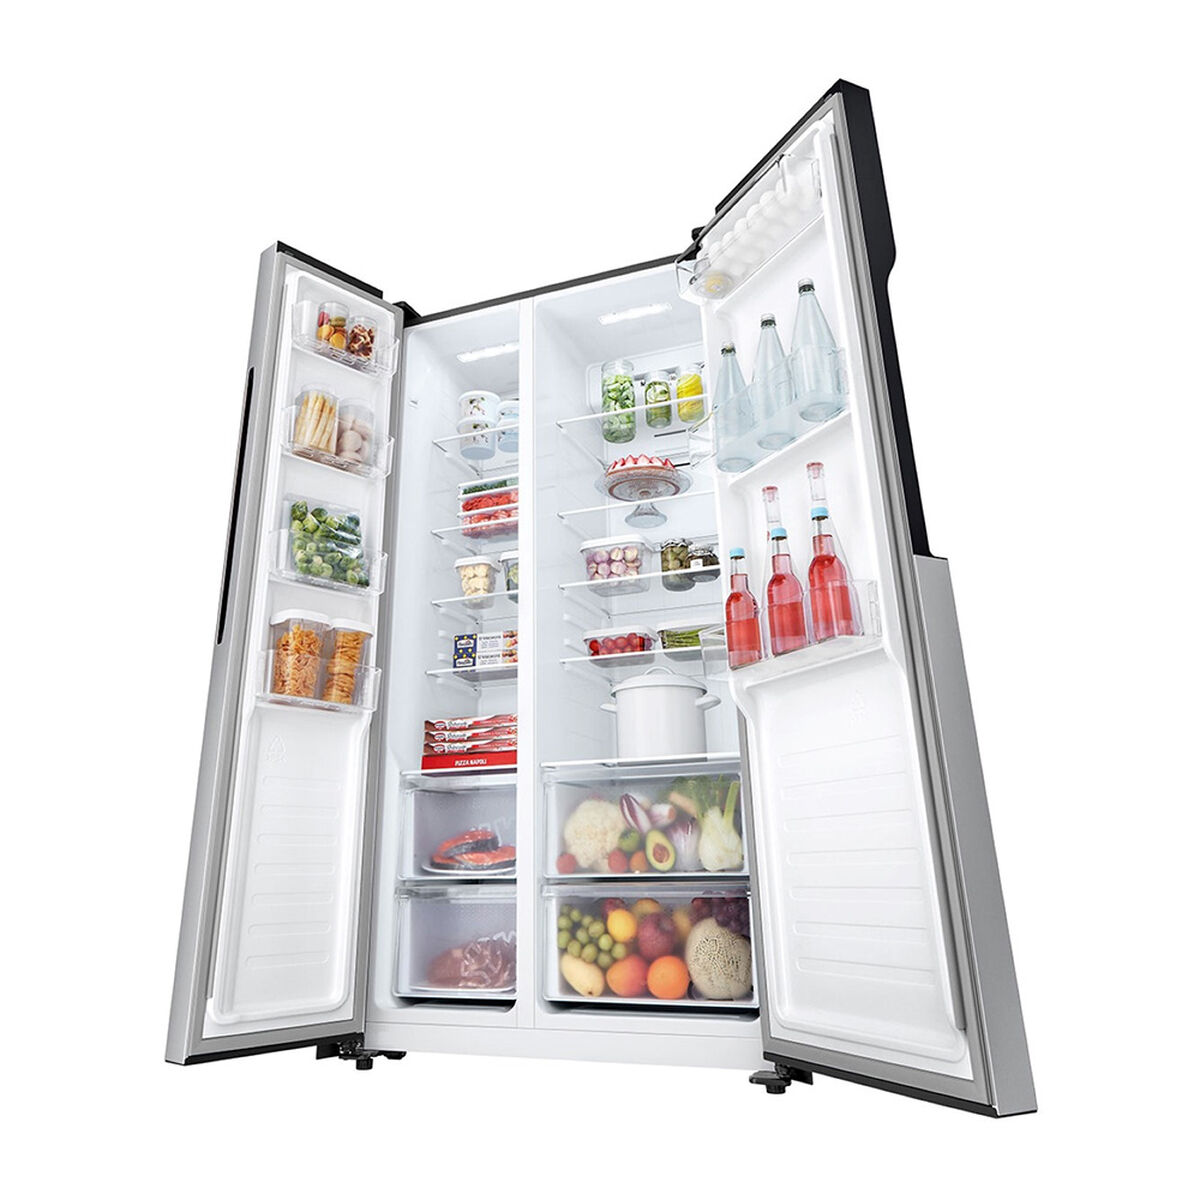 Refrigerador Side by Side LG GS51MPP 509 lts